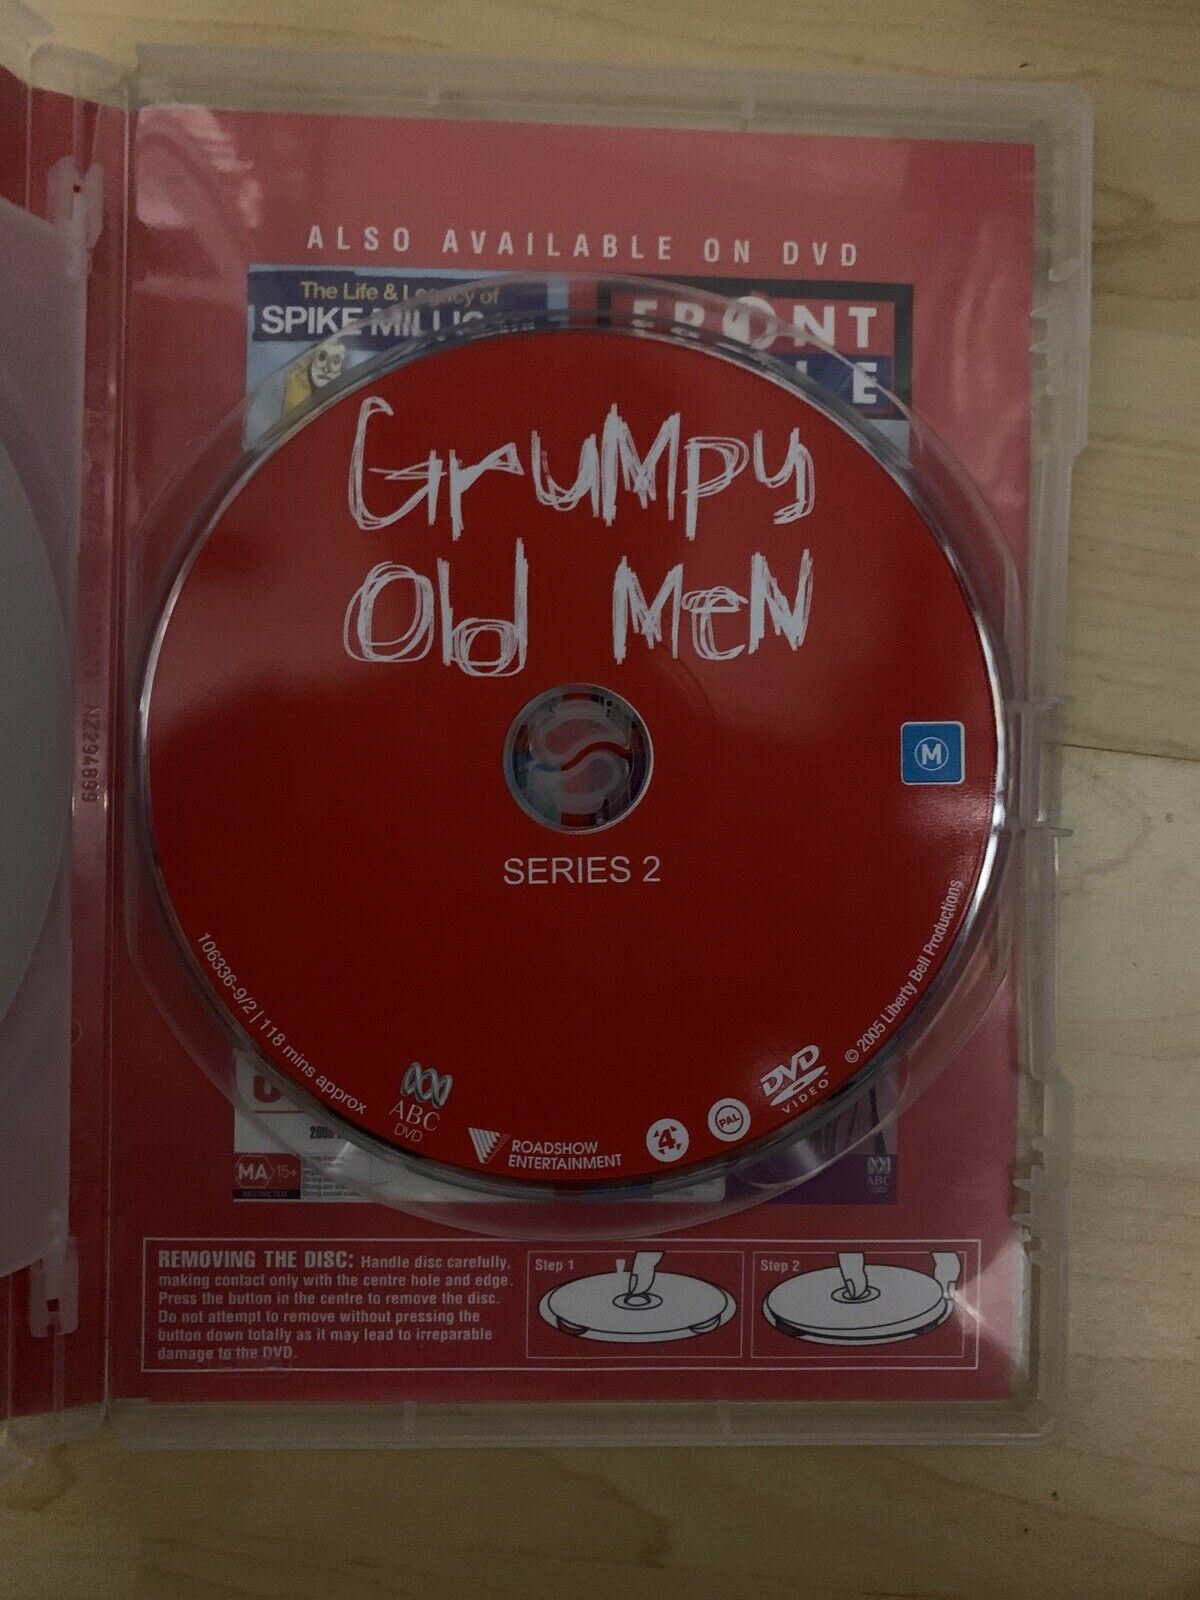 Grumpy Old Men : Series 1 & 2 (DVD, 2006, 2-Disc Set)